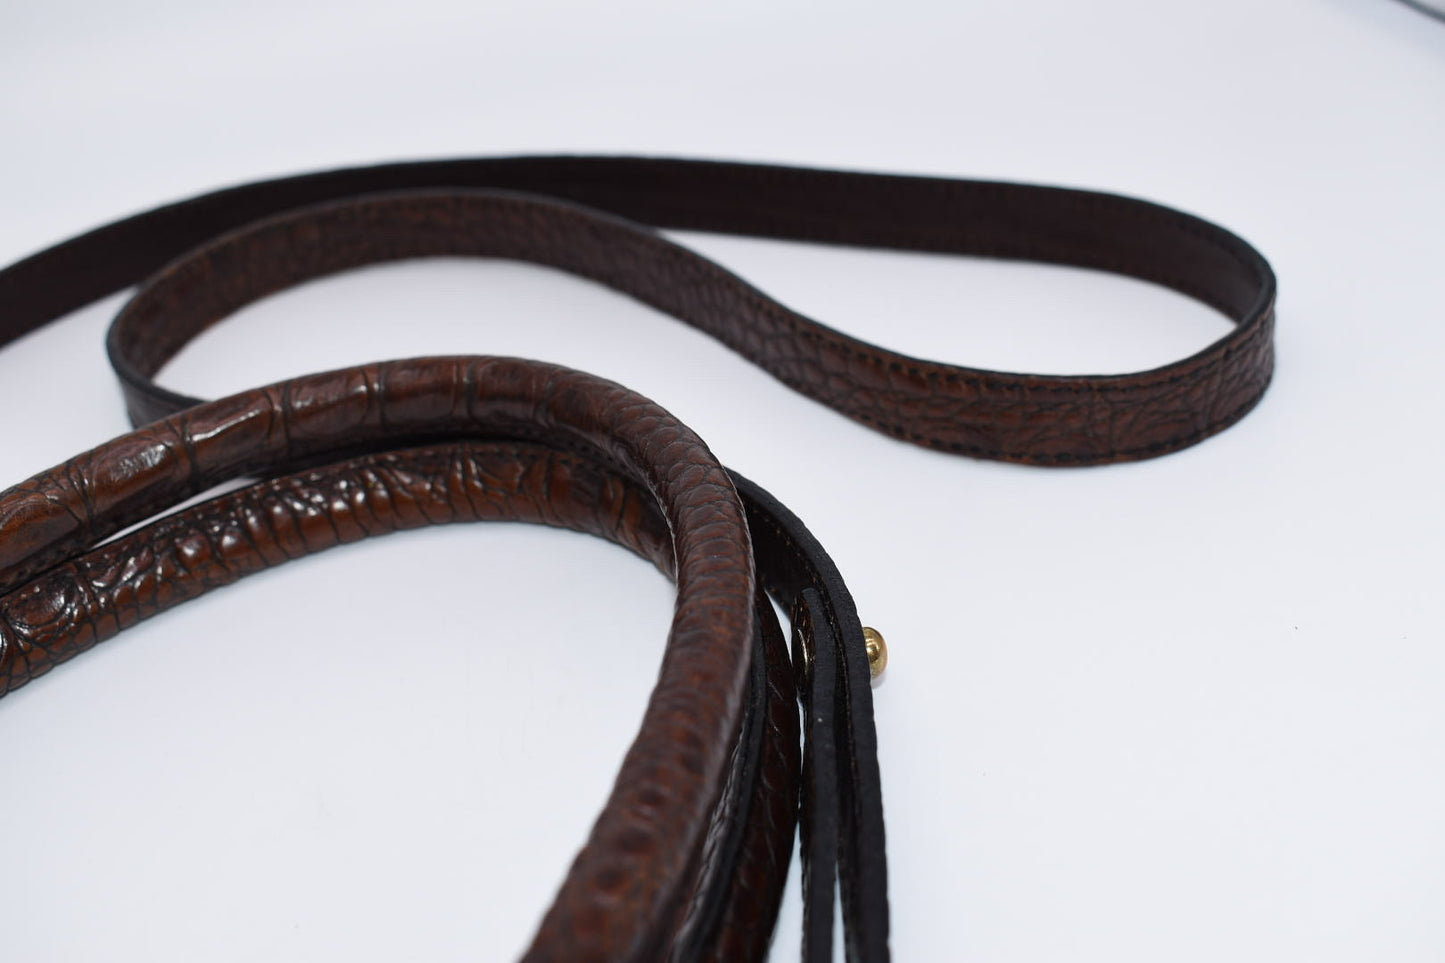 Brahmin Eugenia Black Tuscan Colle Black & Brown Leather Satchel Bag